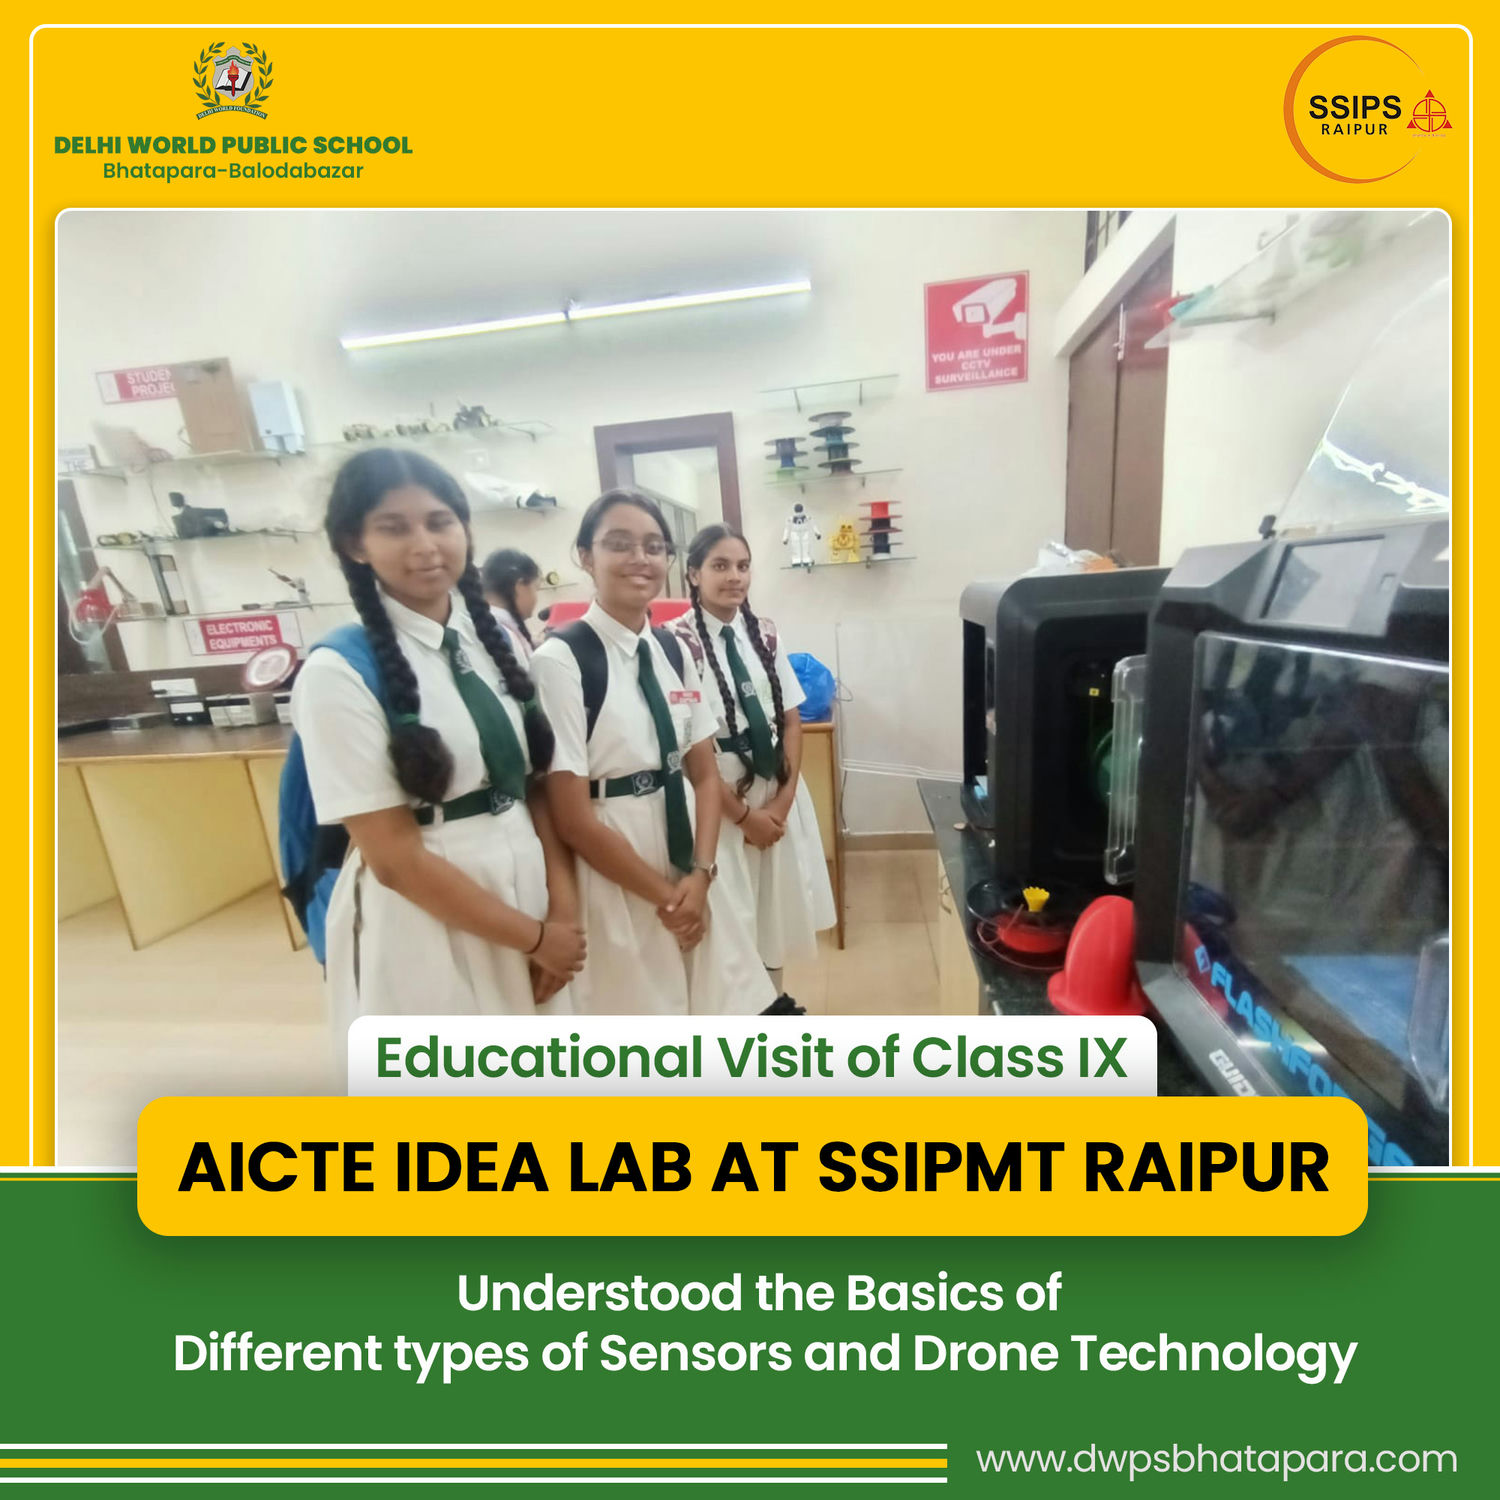 DWPS Bhatapara - Education Visit of Class IX AICTE Idea Lab at SSIPMT Raipur